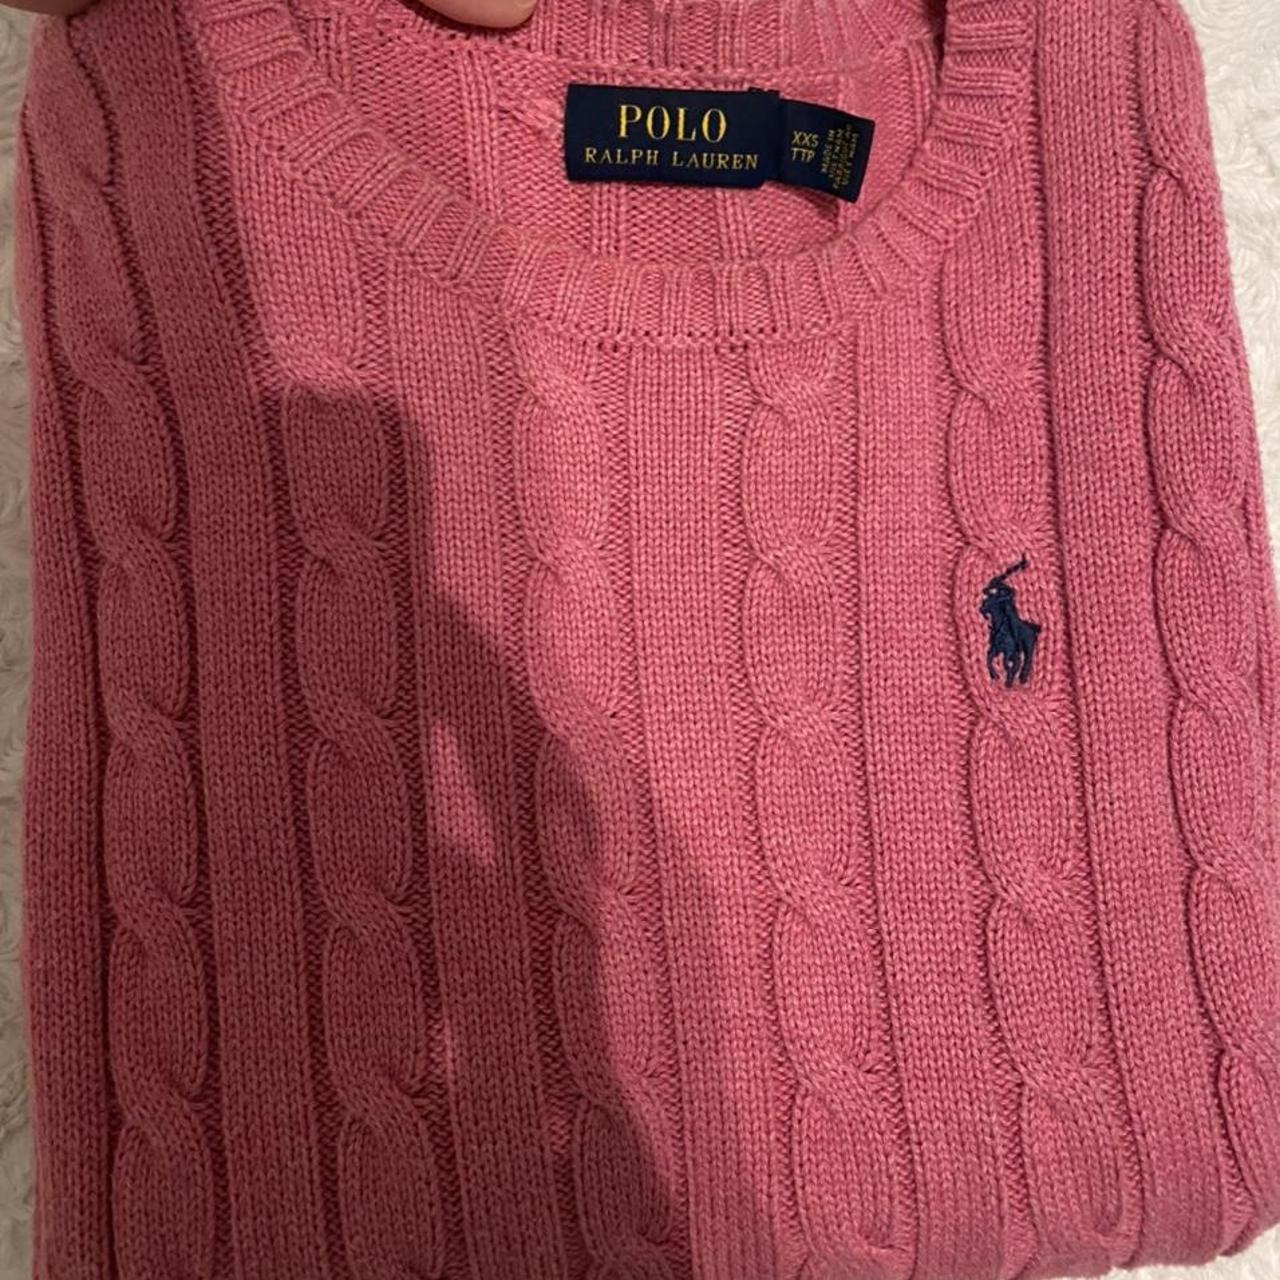 Pink Ralph Lauren cable knit sweater Size Xxs but... - Depop